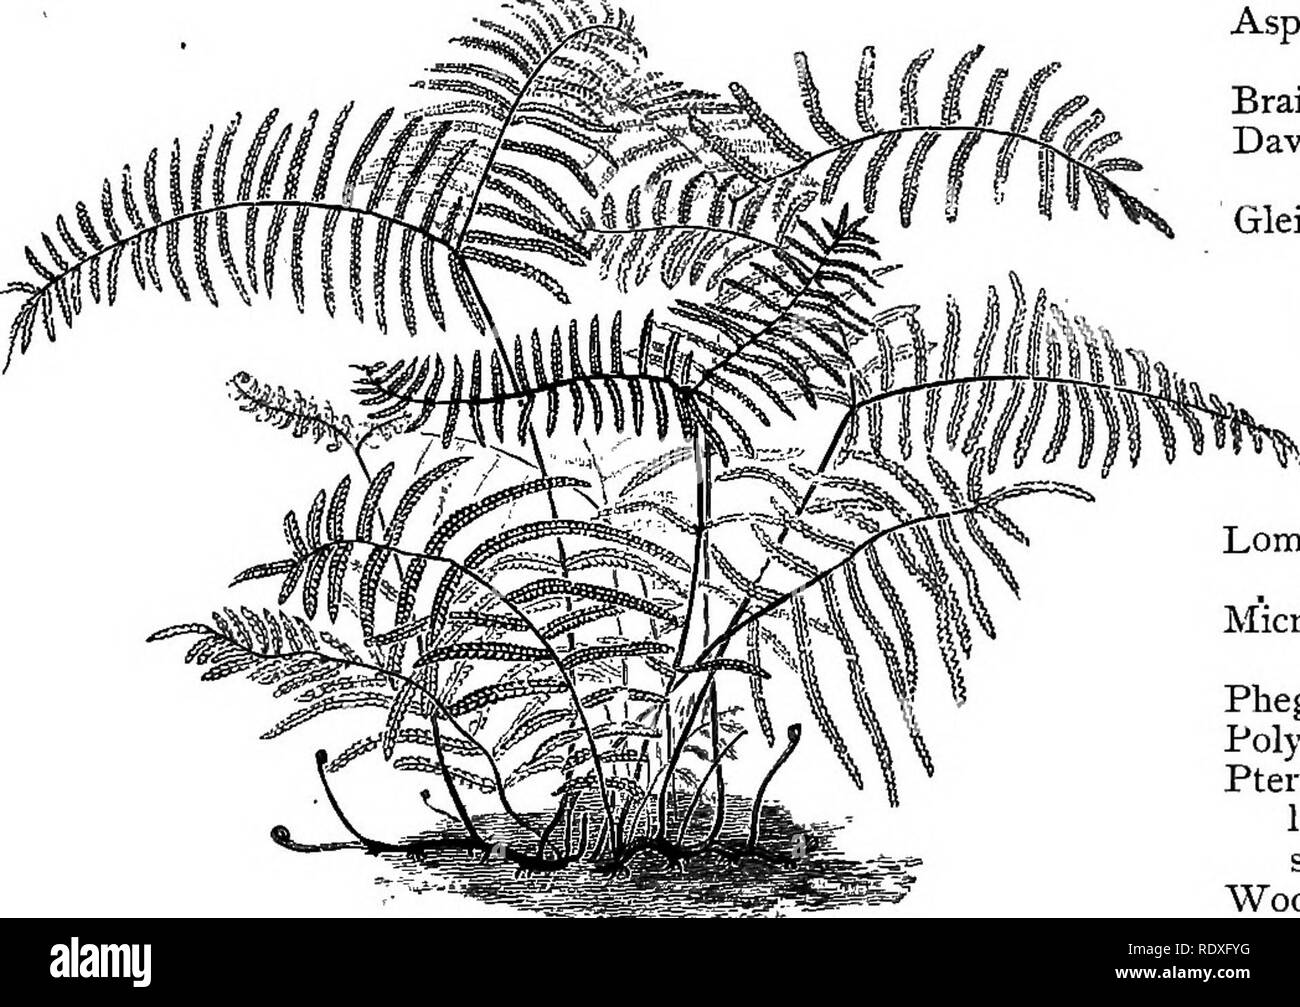 . The Book of gardening; a handbook of horticulture. Gardening; Horticulture. 568 THE BOOK OF GARDENING. Adiantum Lathomii. peruvianiim. trapeziforme (Fig. 332). Aglaomorpha Meyeniana (Fig. 355). Anemias, of sorts. Asplenium Nidus. Davallia fijiensis and varieties. Mooreana. polyantha. tenuifolia Veitch'ii. Gymnogramme chrysophylla Alstoniae. Gymnogramme peruviana argyrophylla. scliizophylla gloriosa. Nephrolepis davallioides. d. furcans. rufescens tripinnatifida. Microlepia hirta cristata. Platycerium grande. Polypodium Schneiderii. sub-auriculatum (Fig. 341). Pteris ludens. Greenhouse Ferns  Stock Photo